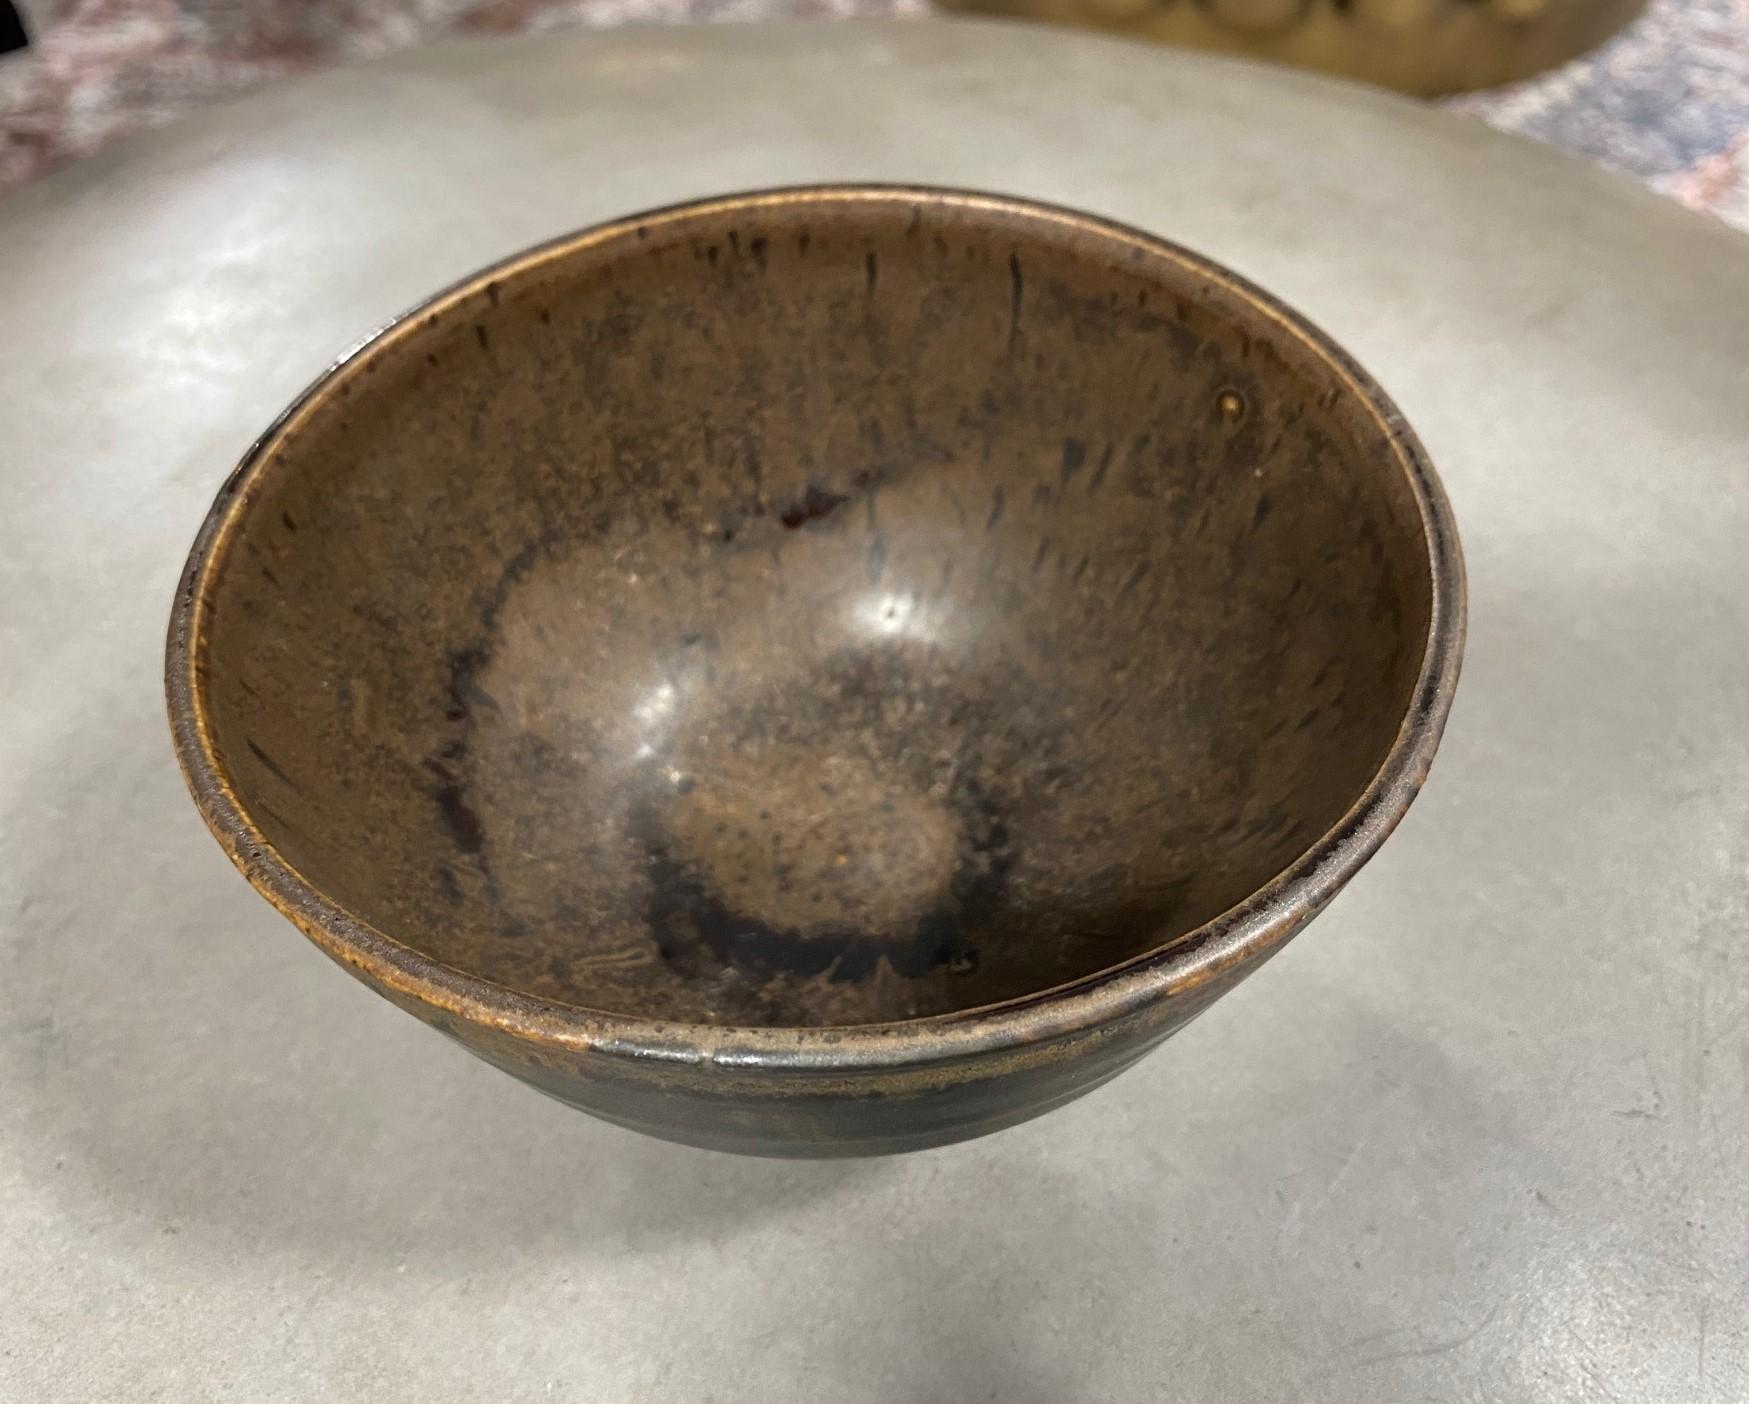 American Toshiko Takaezu Signed Mid-Century Modern Glazed Ceramic Pottery Chawan Tea Bowl